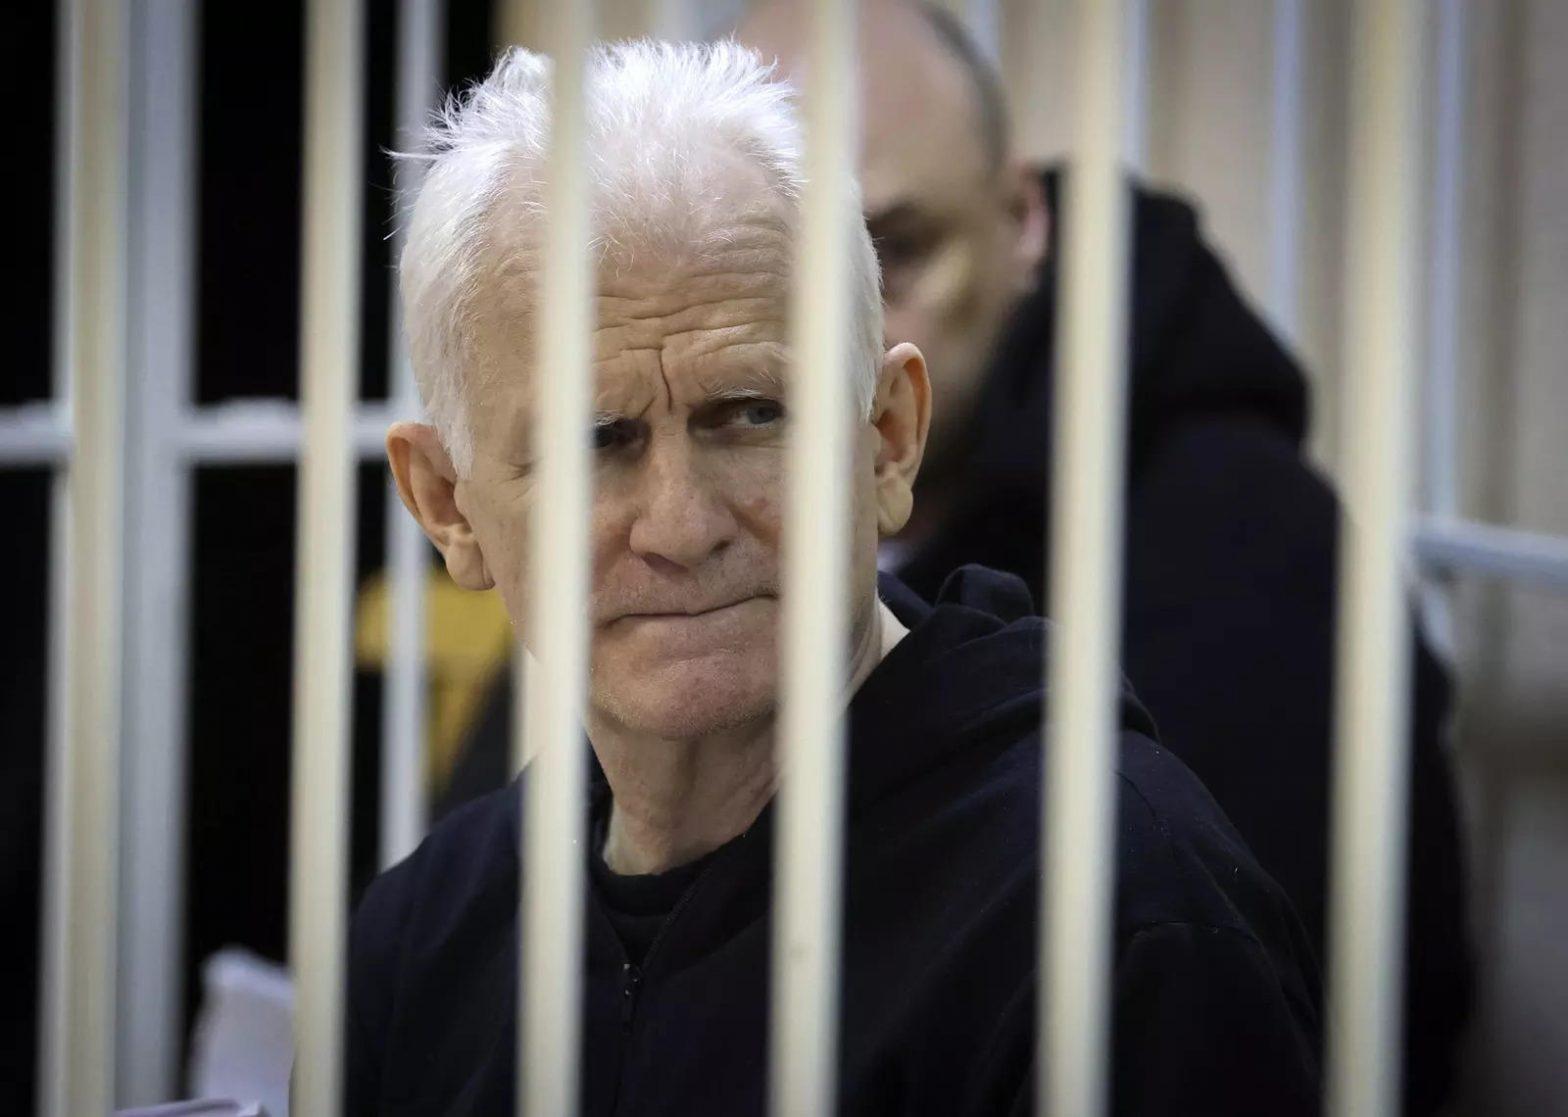 Ales Bialiatski sentenced prison for 10 years